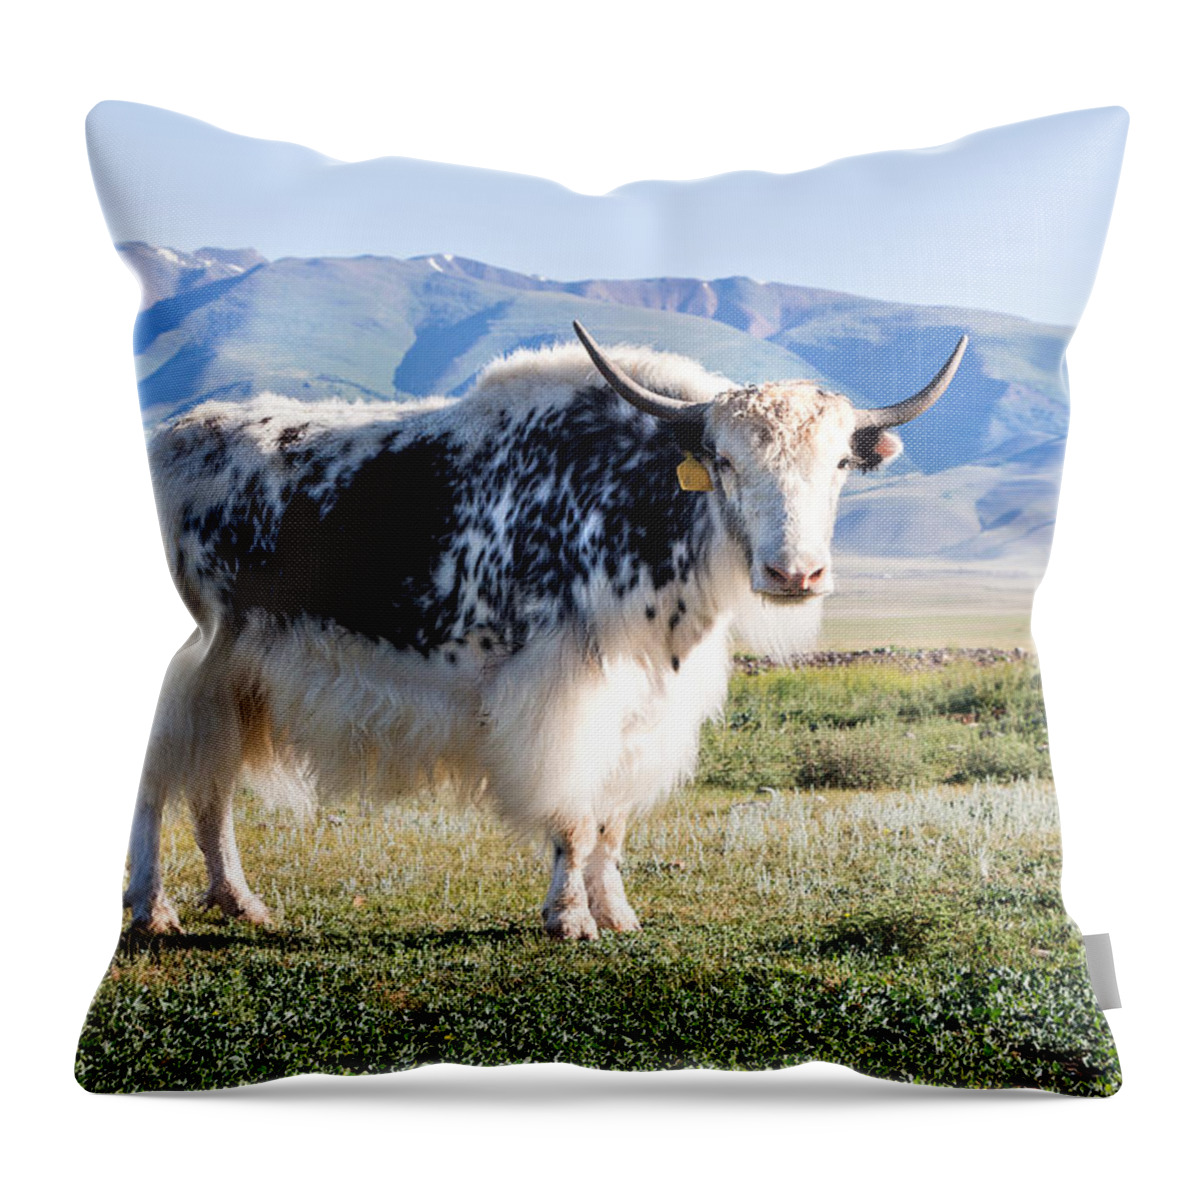 Grunting Ox In Altai Prairie Throw Pillow featuring the photograph Grunting Ox in Altai Prairie by Victor Kovchin